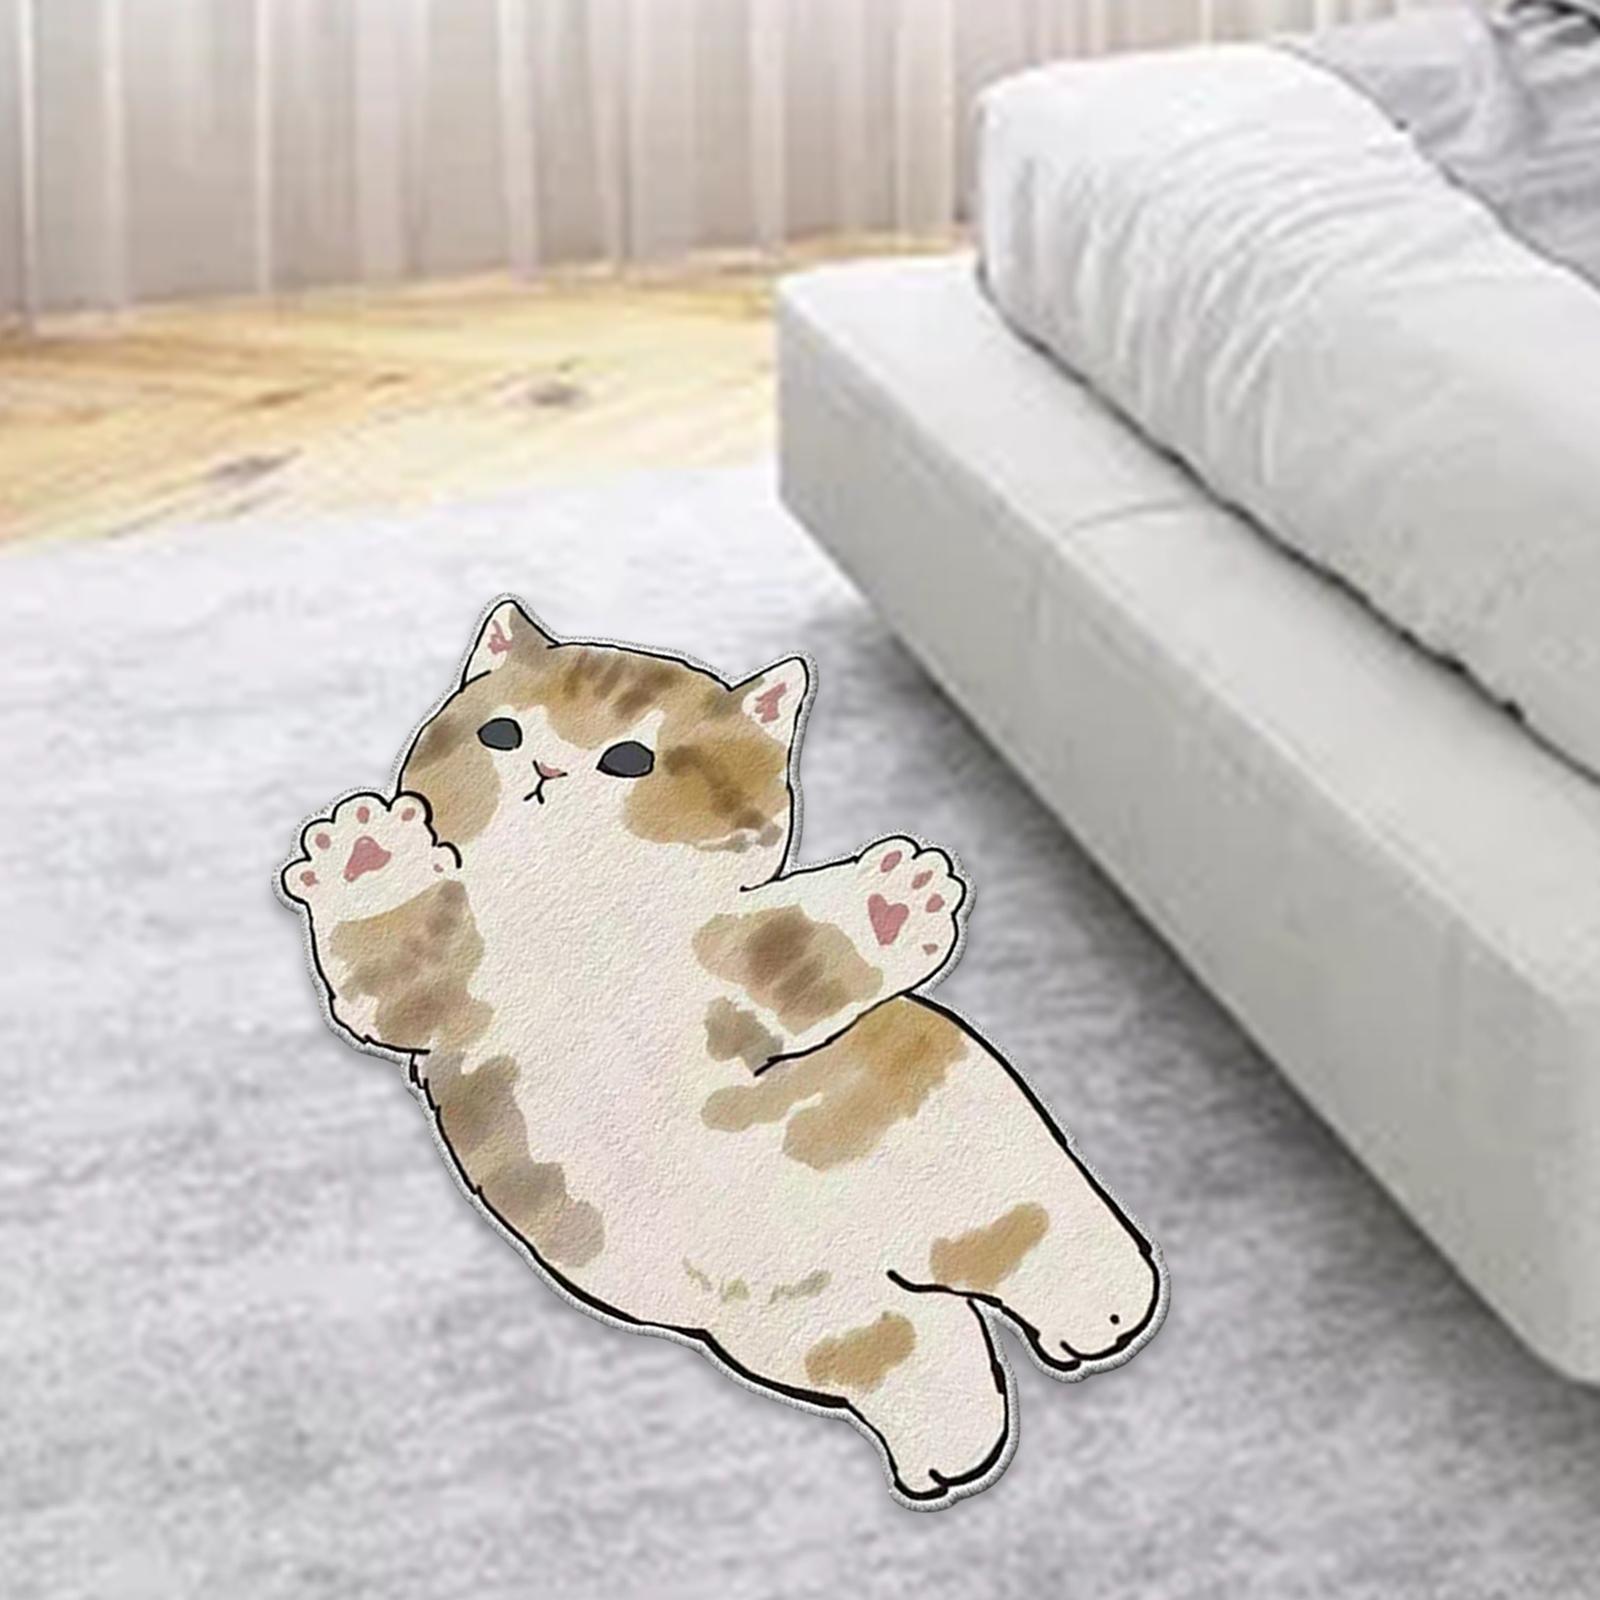 Floor Mats Area Rug Cartoon Cat Carpet for Bedroom Bathroom Home Decoration B